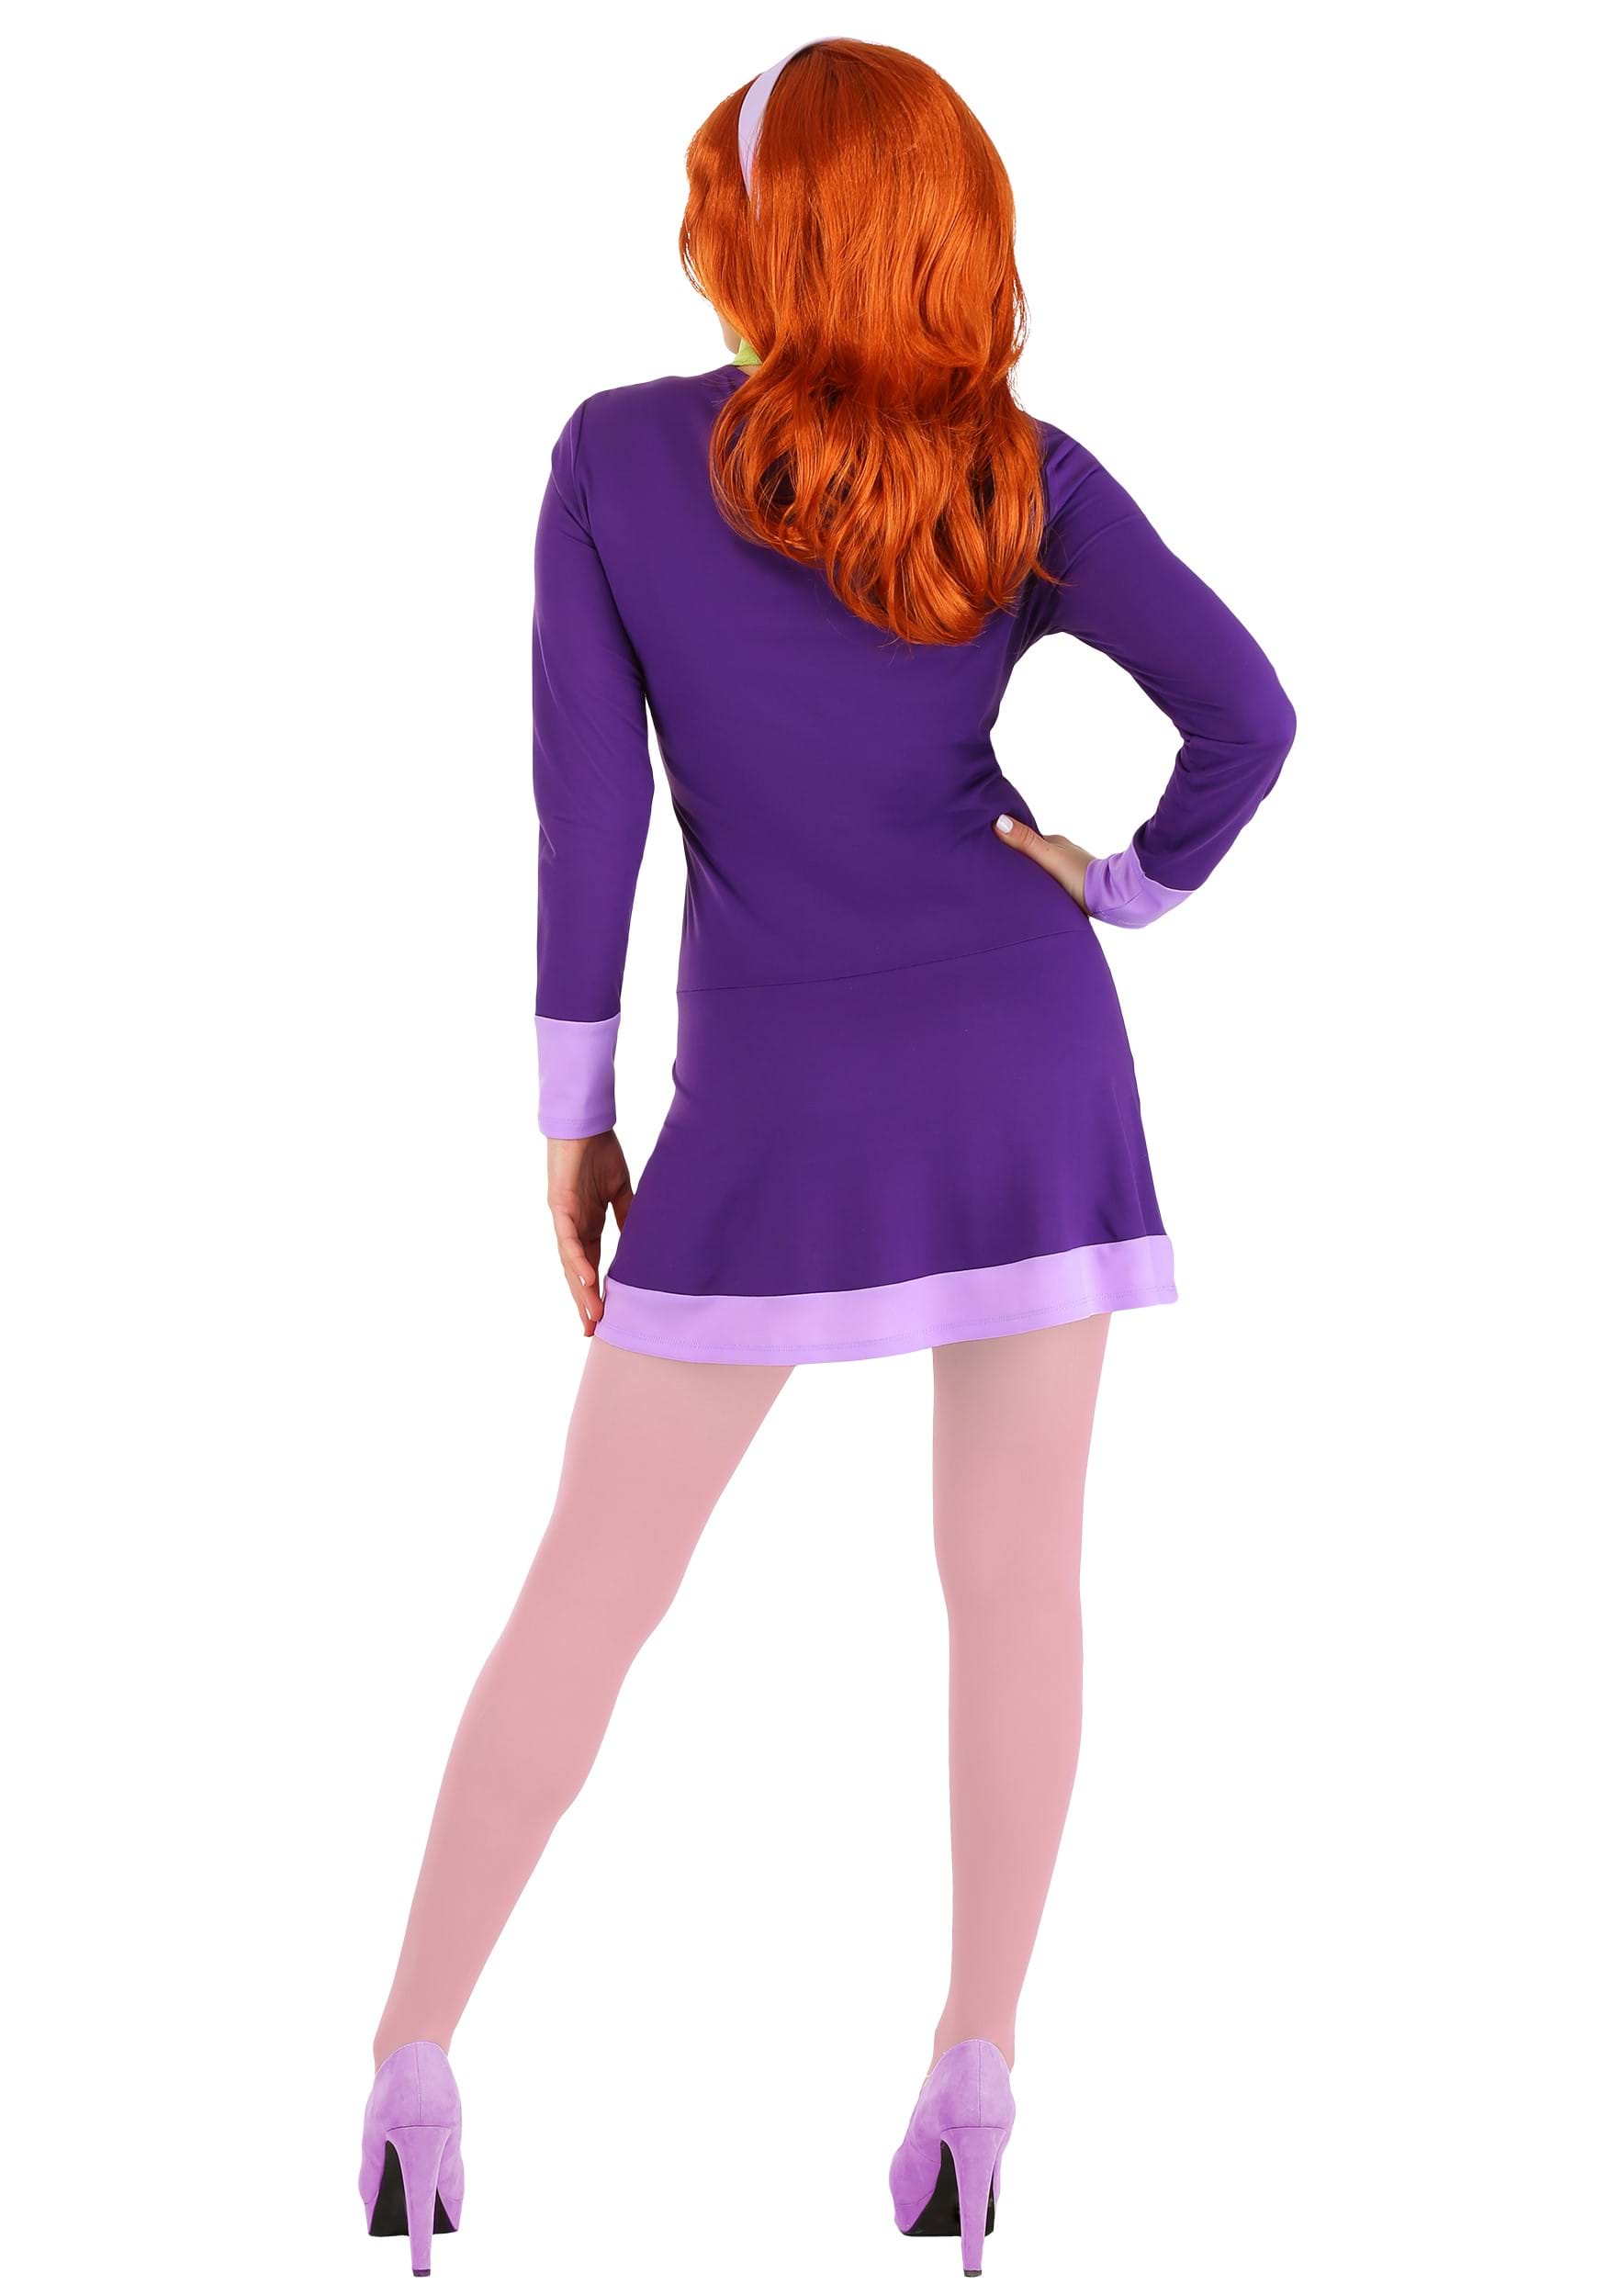 Daphne Scooby Doo Suit